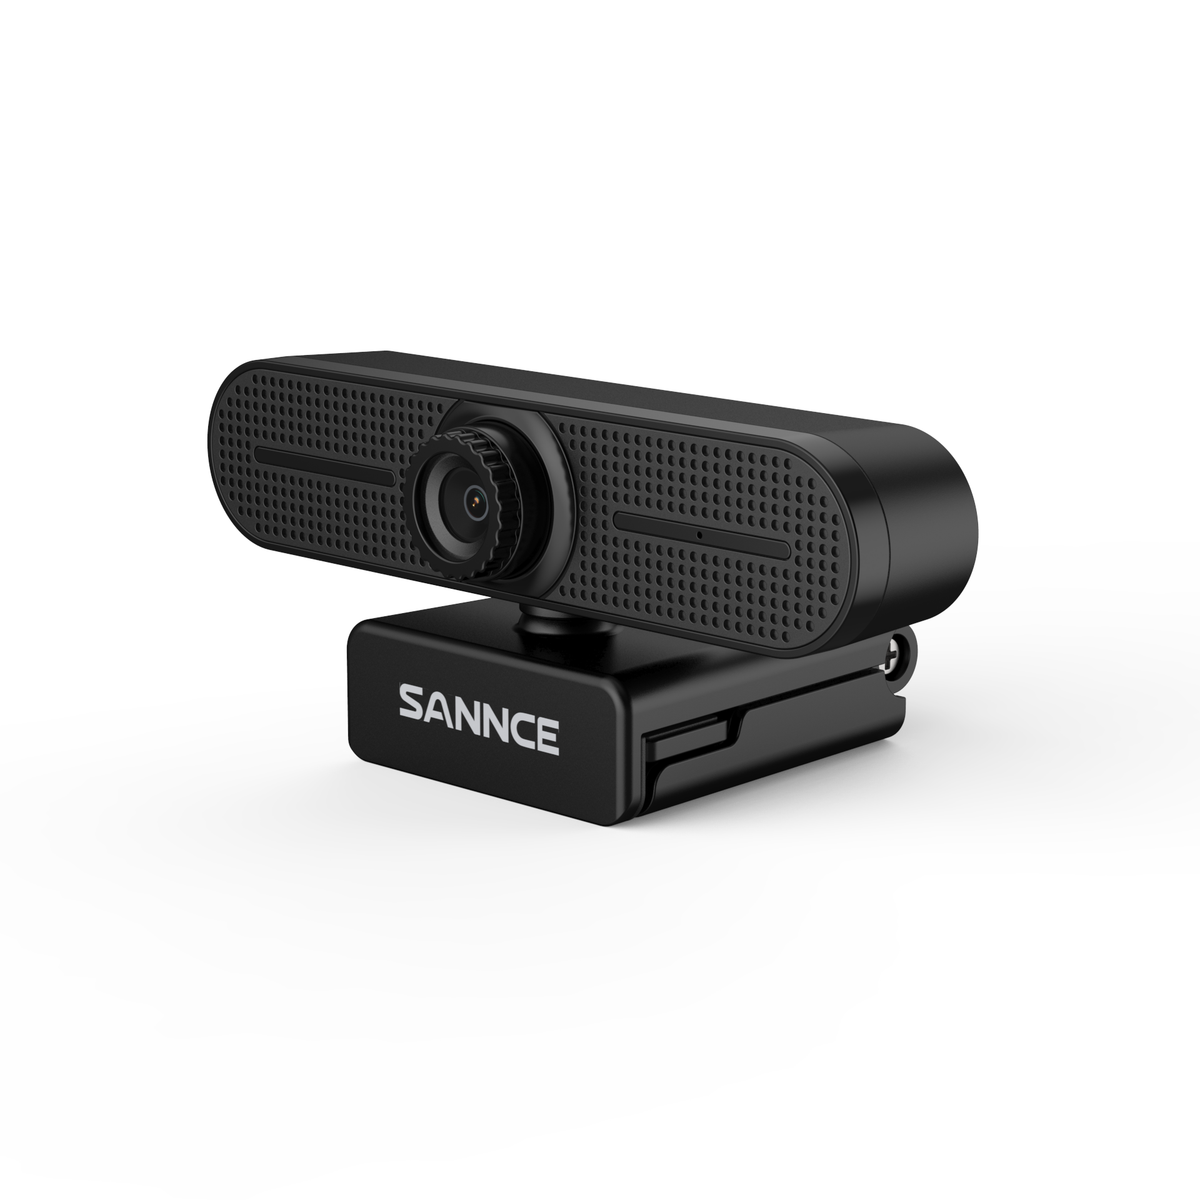 SANNCE Webcam 1080p Full HD Web Camera